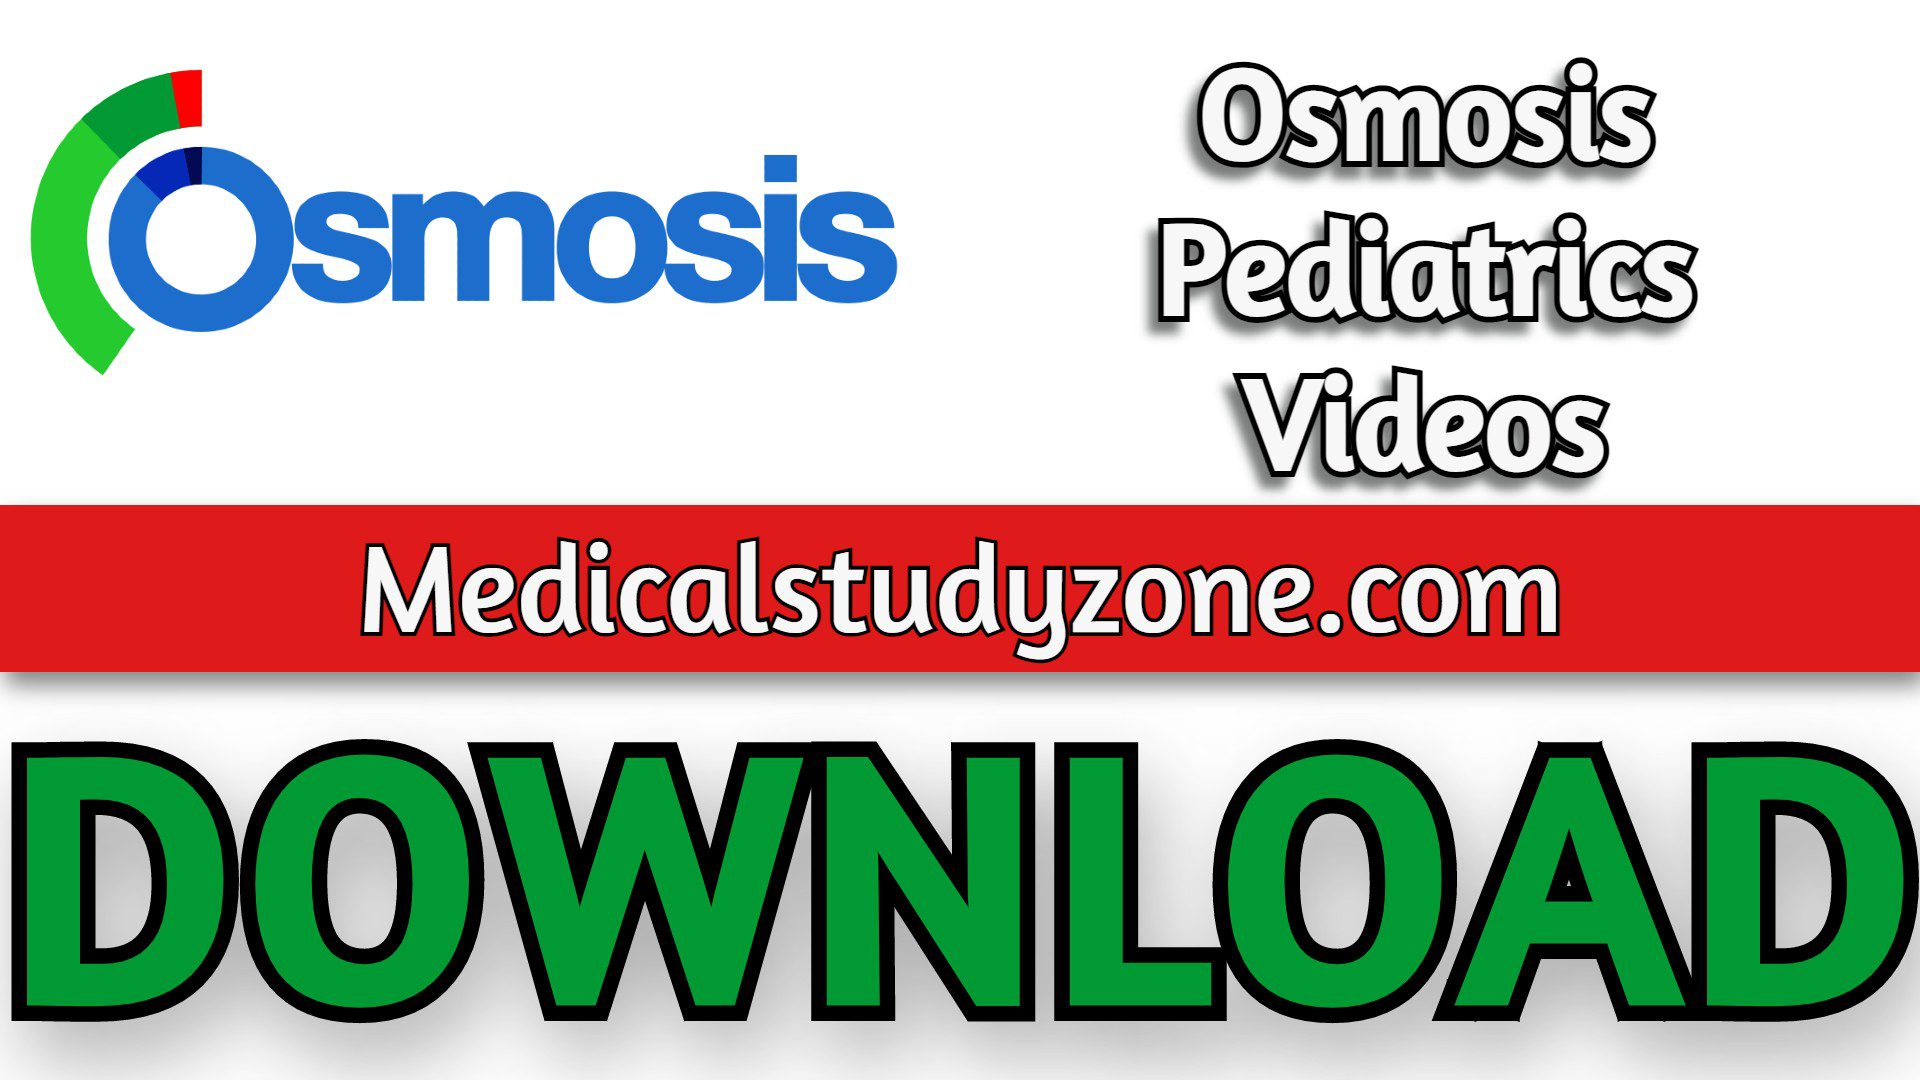 Osmosis Pediatrics Videos 2022 Free Download